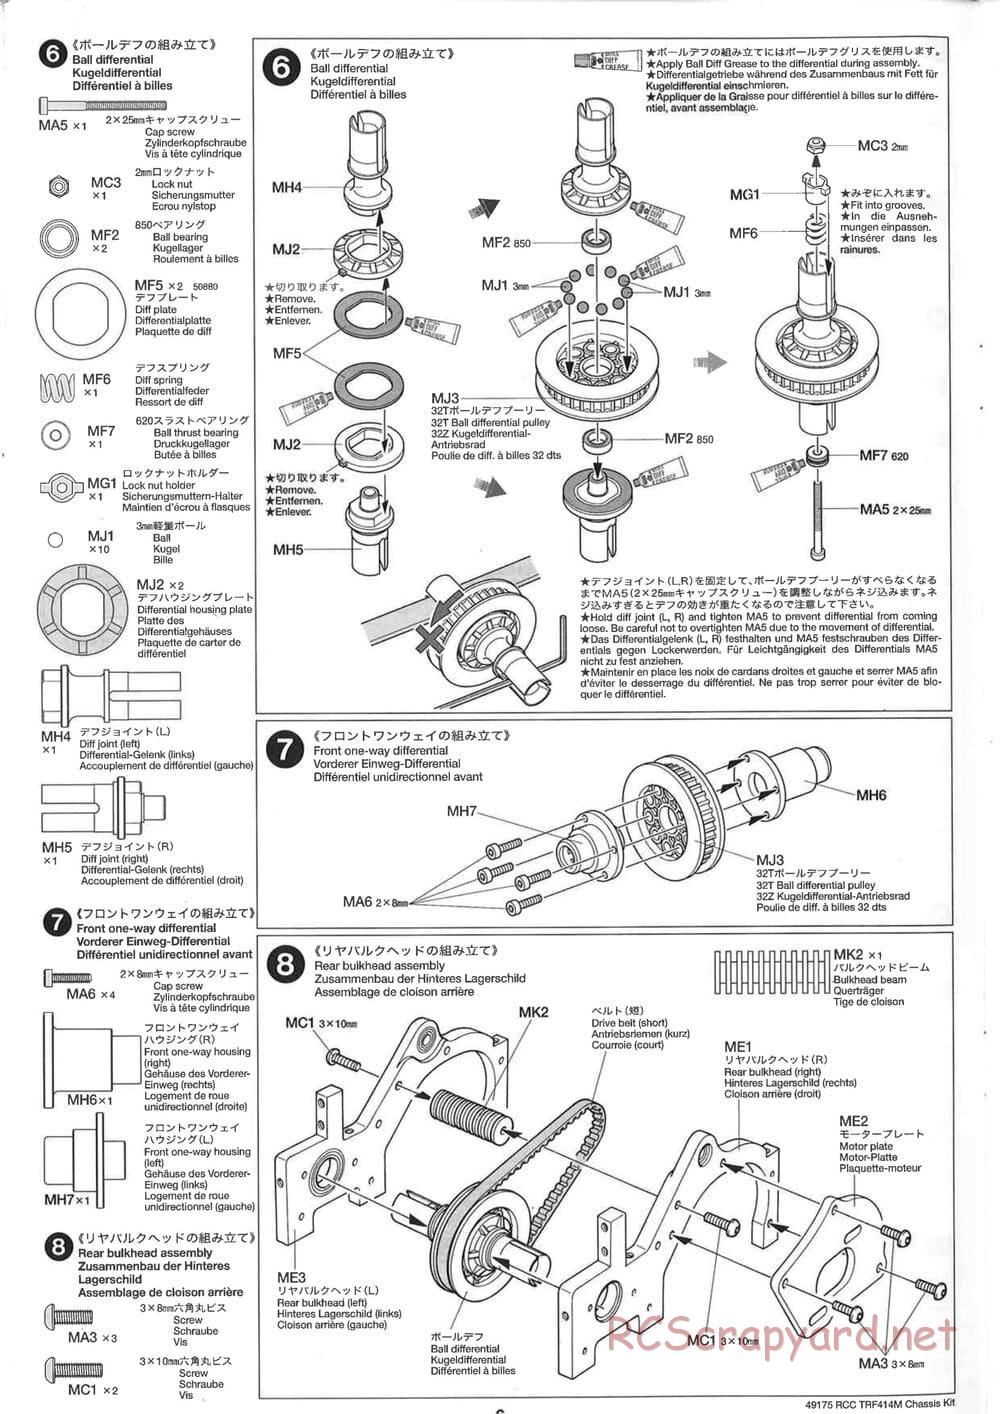 Tamiya - TRF414M Chassis - Manual - Page 6